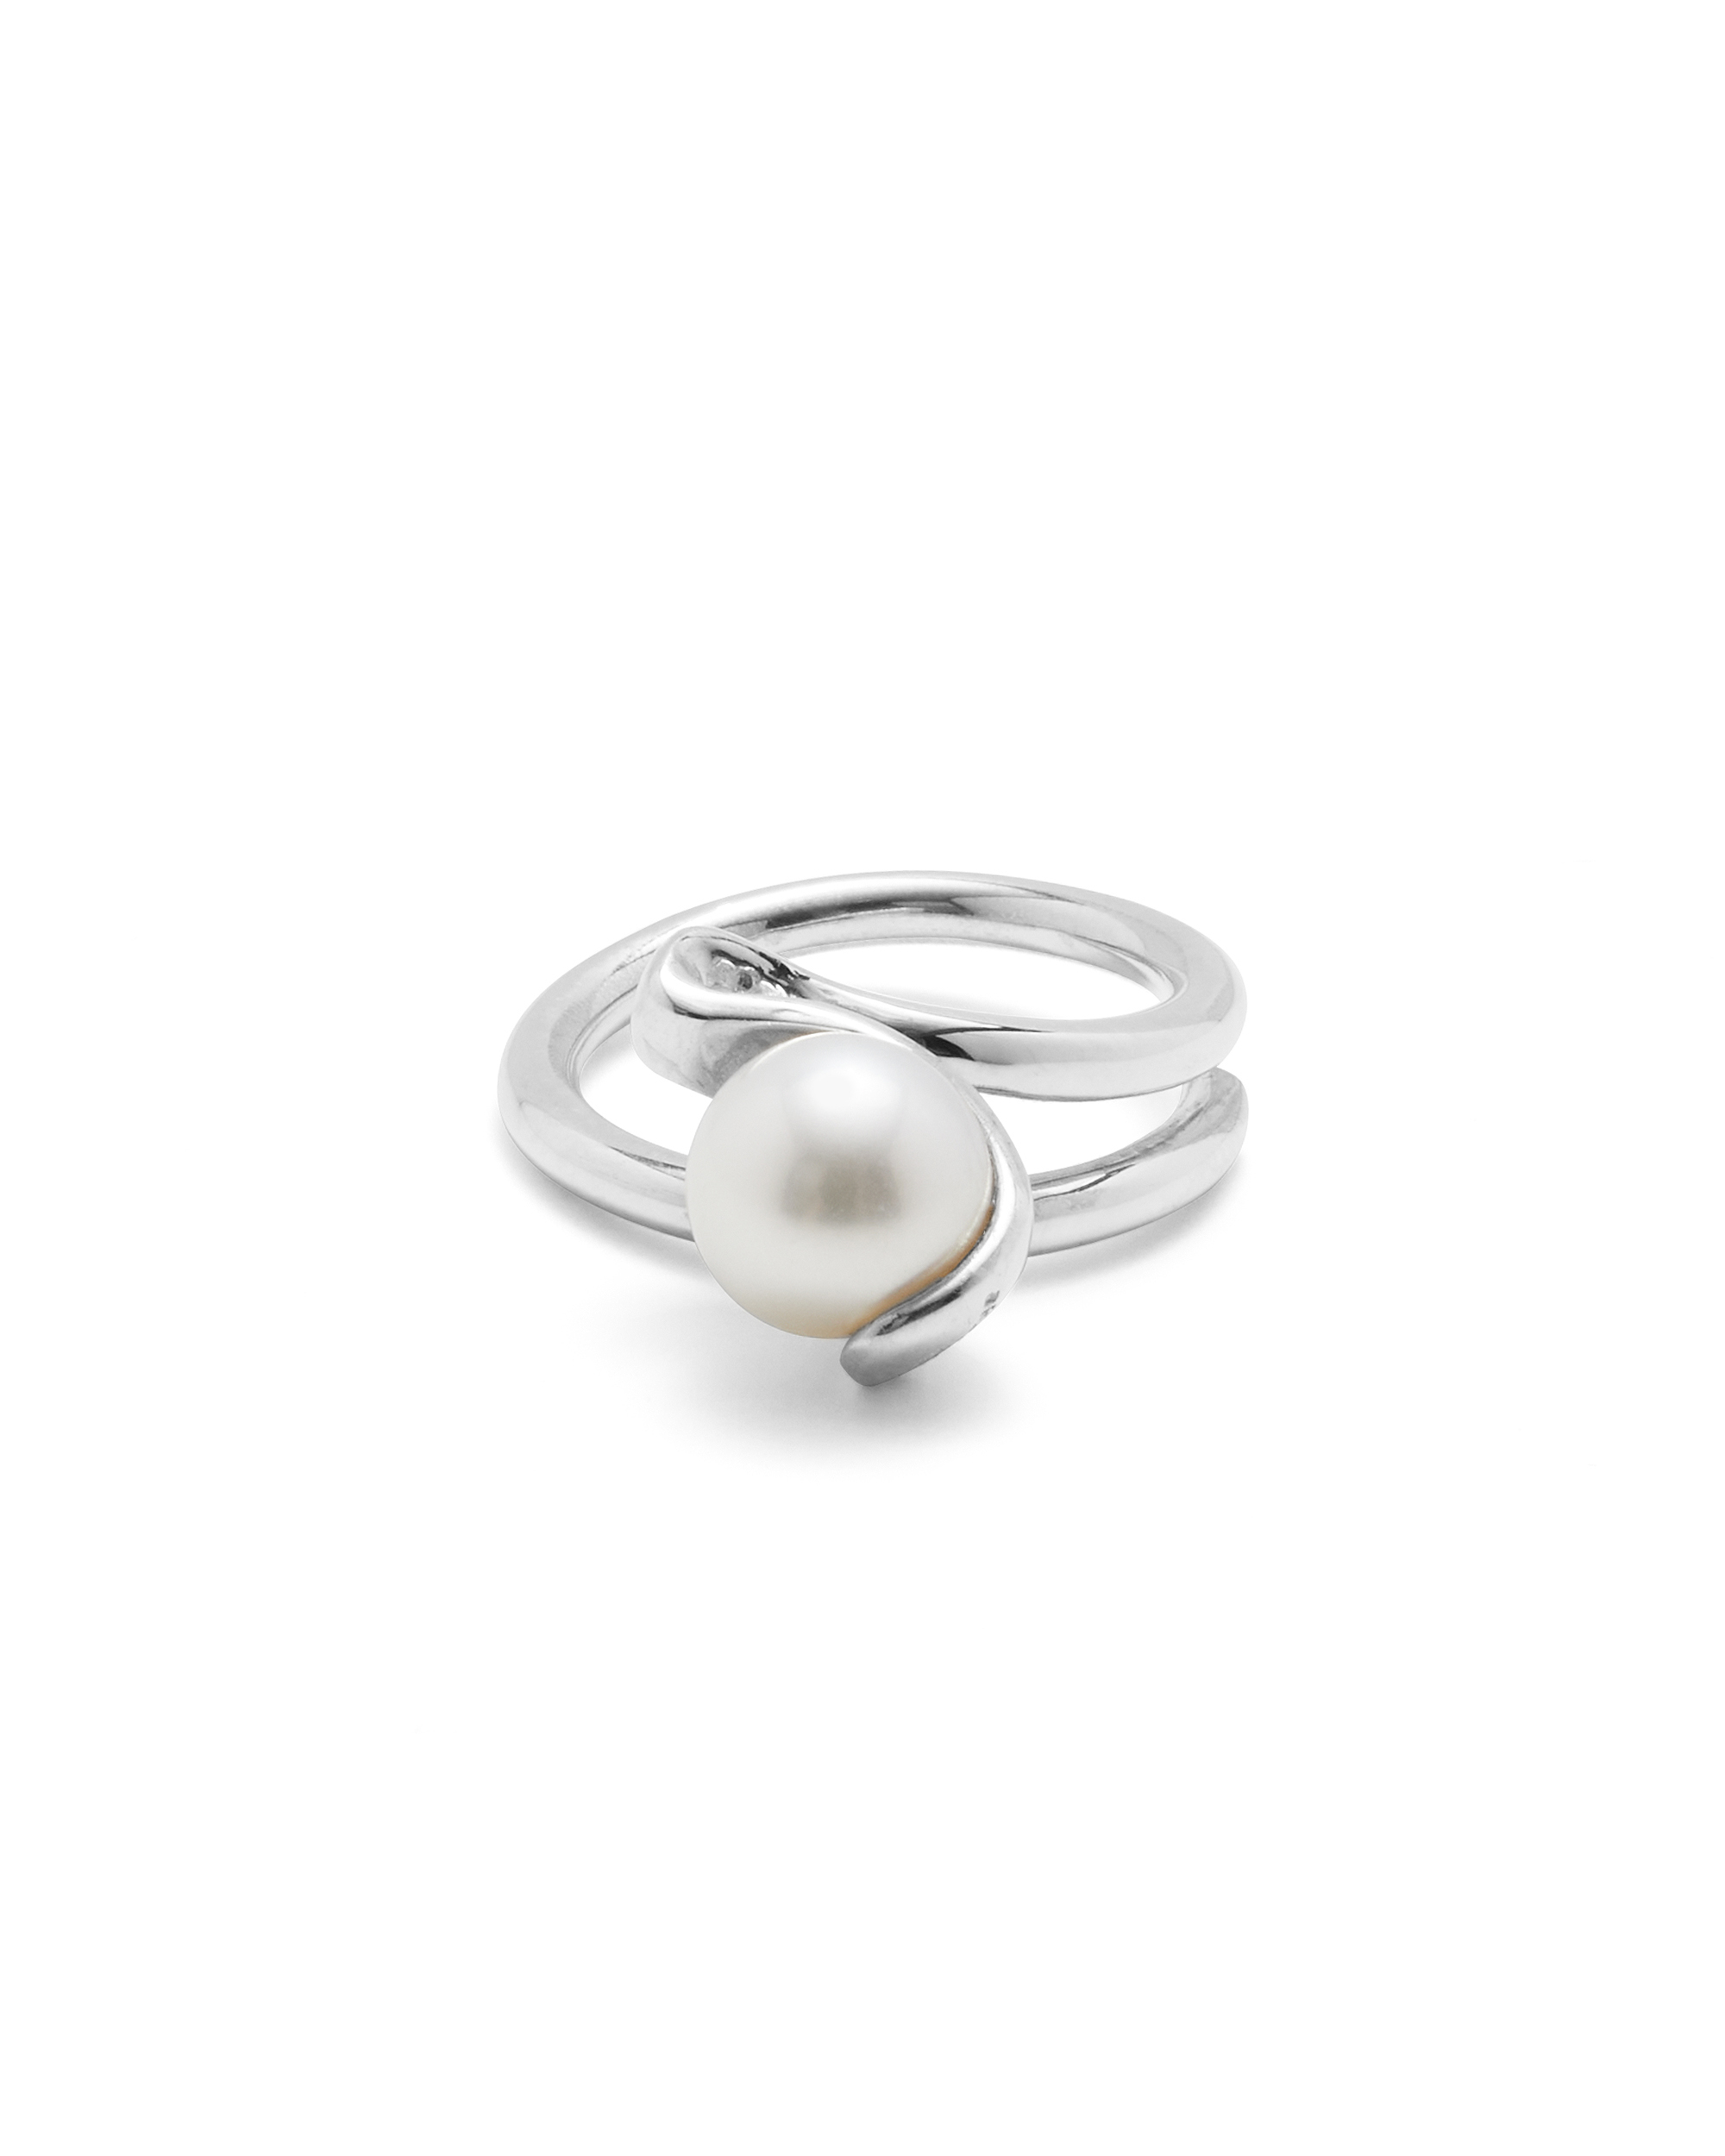 Pearls on Leaves Ring